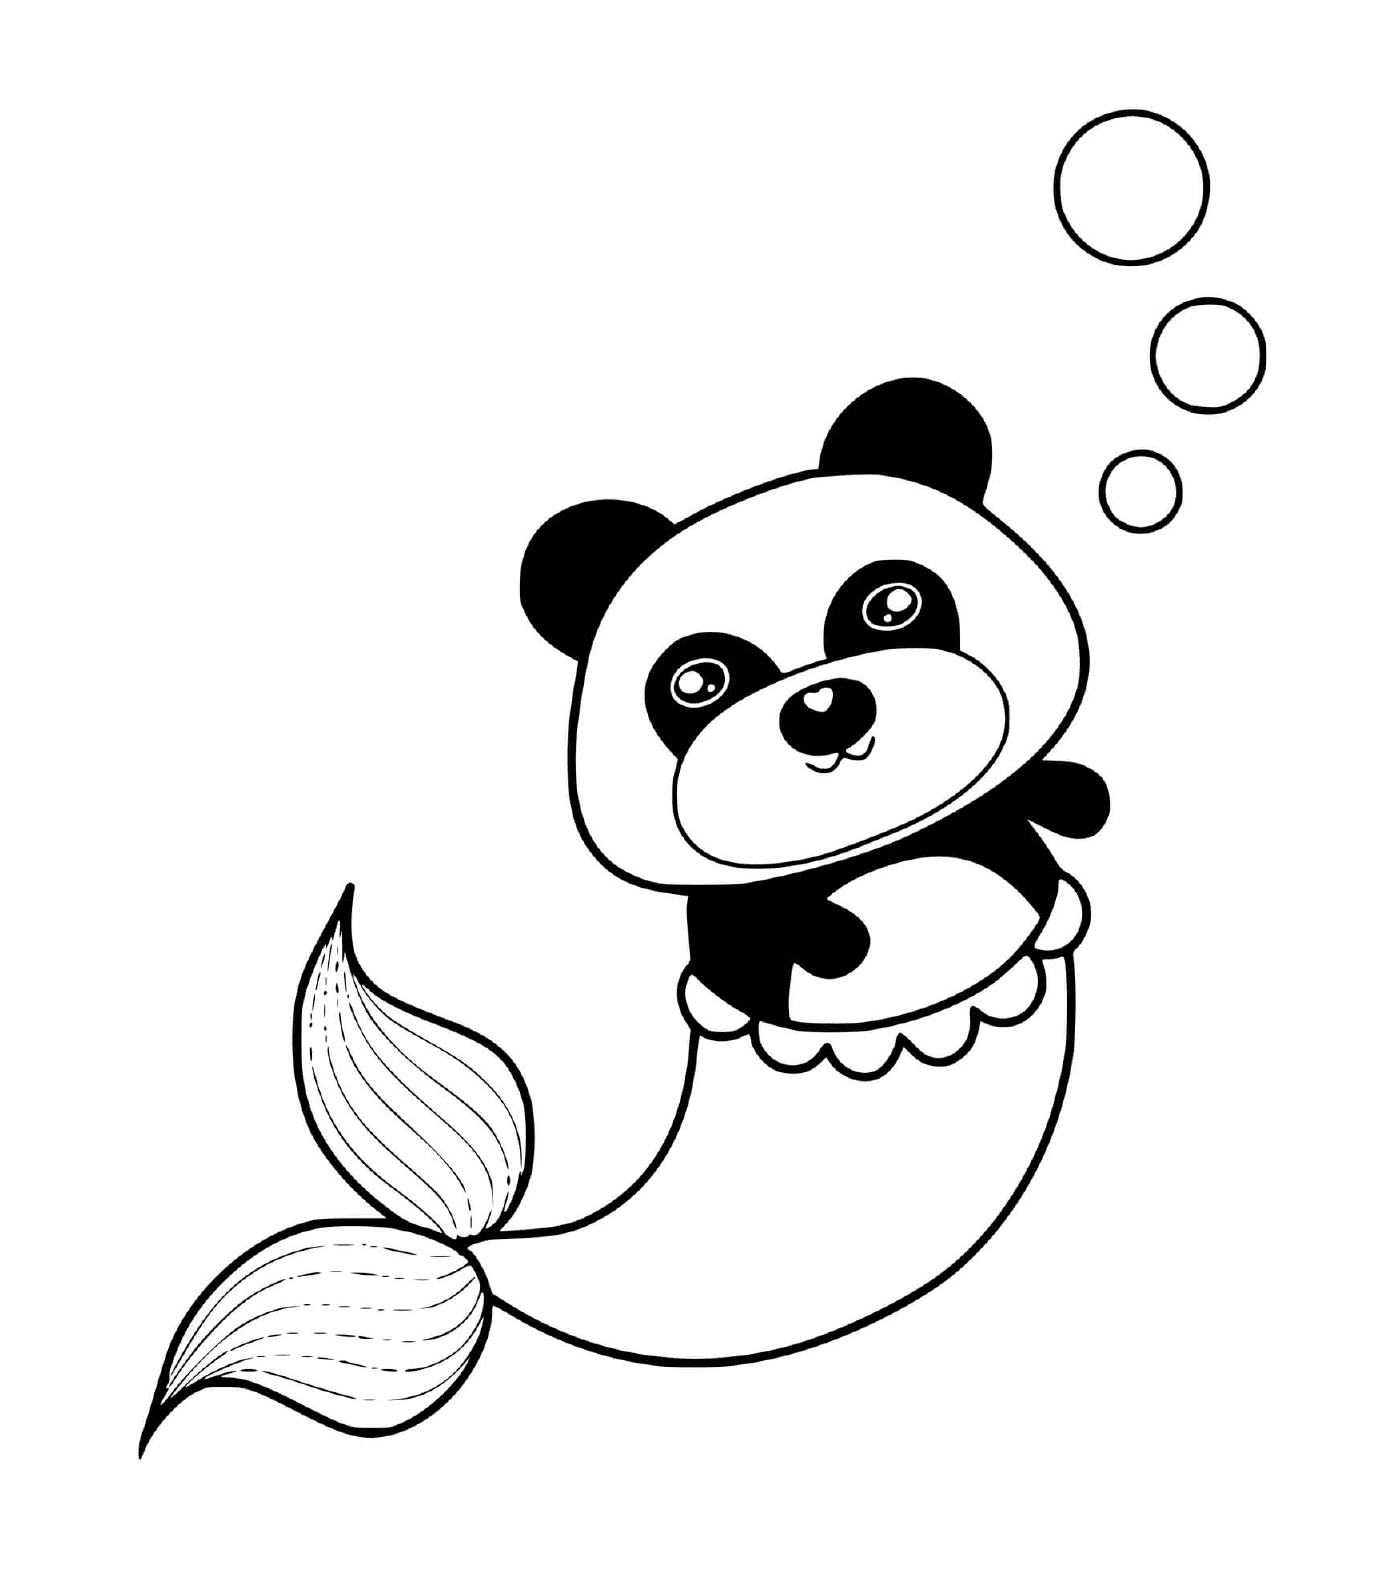  Panda sirena bajo el agua 